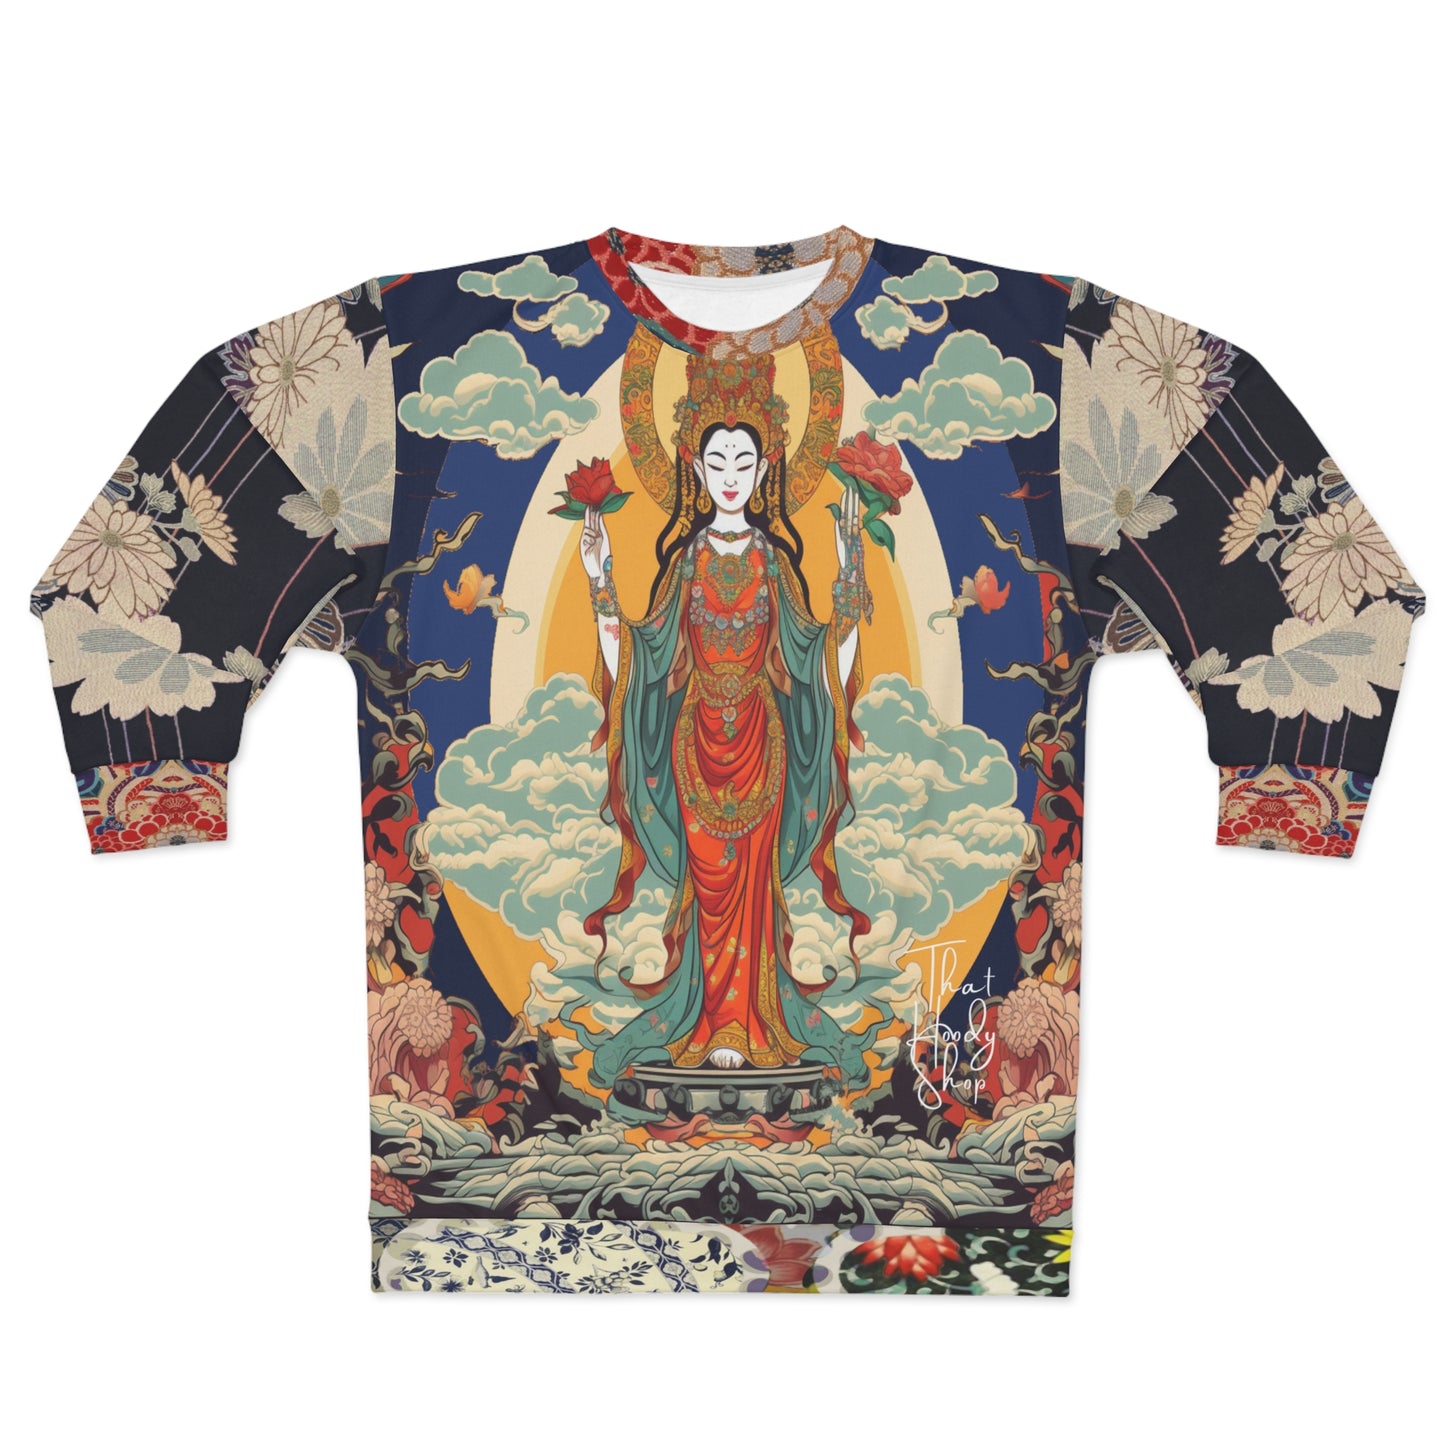 Guan Yin Compassion Goddess in Blue Unisex Sweatshirt